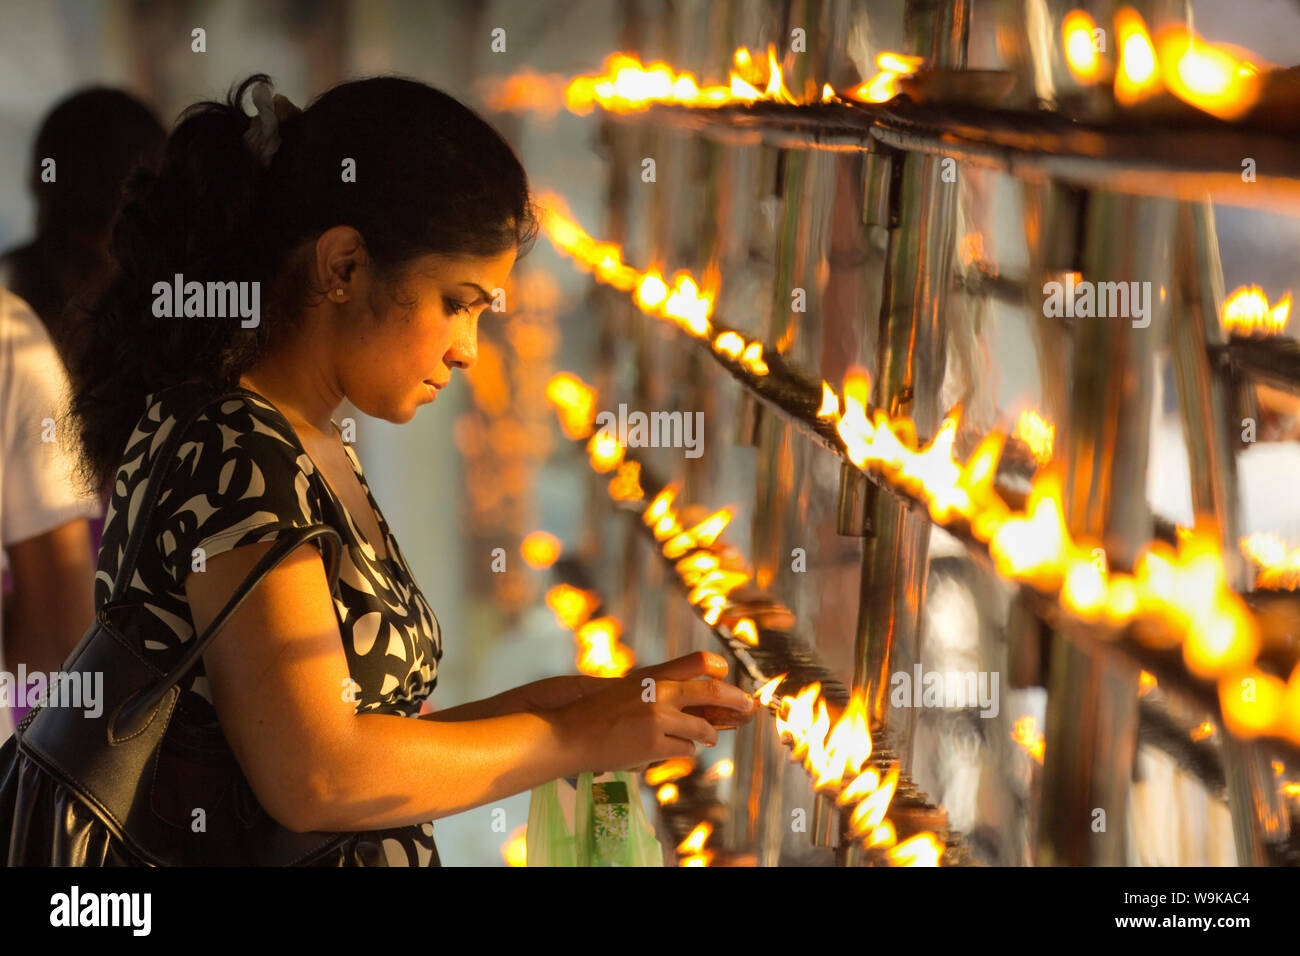 Anhänger Beleuchtung Kerzen bei Sonnenuntergang im Tempel des Heiligen Zahns (Tempel des Zahns), der buddhistische Pilgerfahrt, Kandy, Sri Lanka, Asien Stockfoto